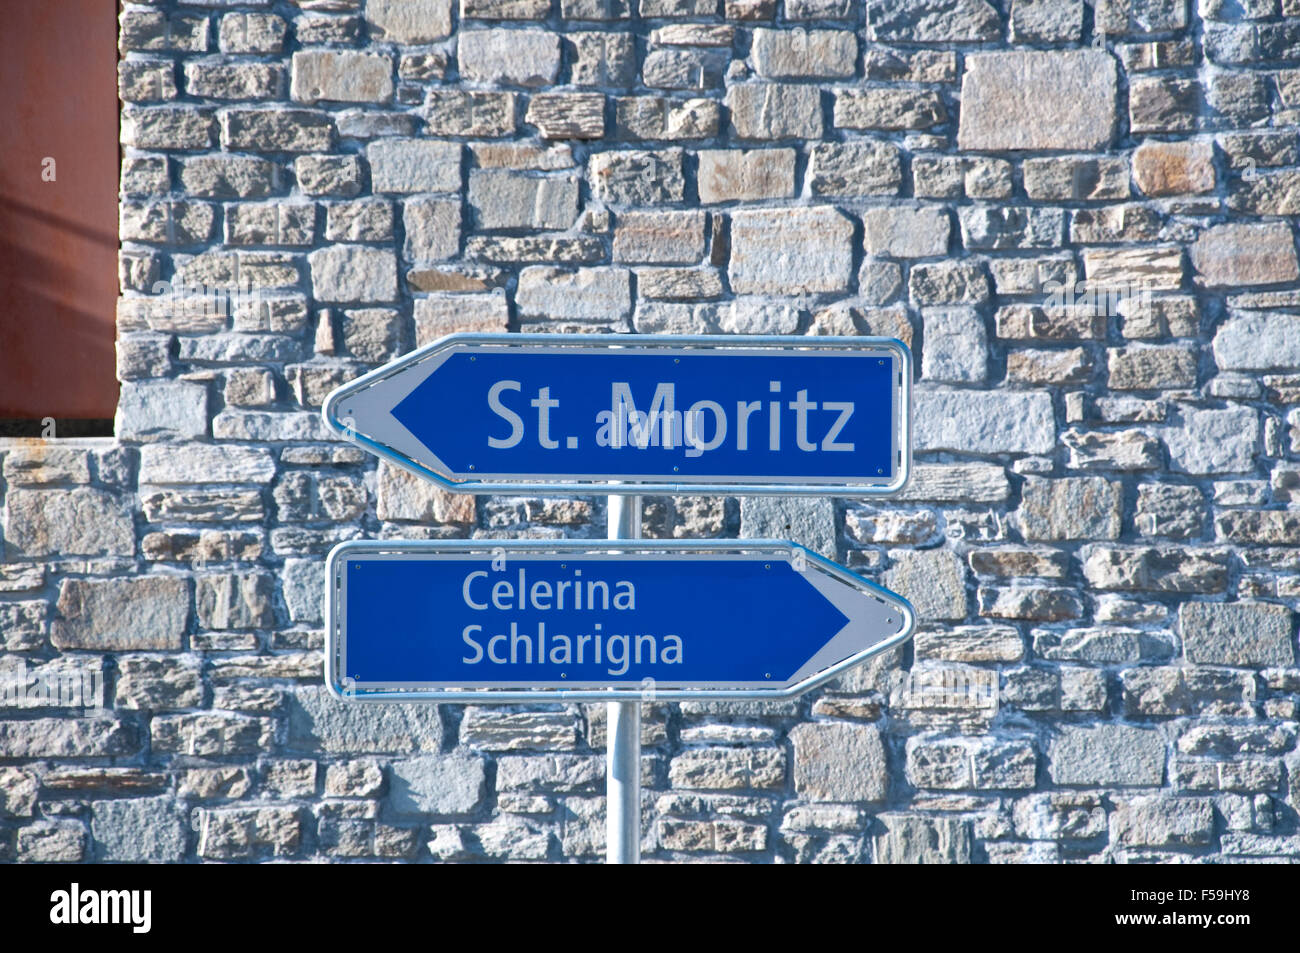 Road signs indicating Saint Moritz and Celerina Stock Photo